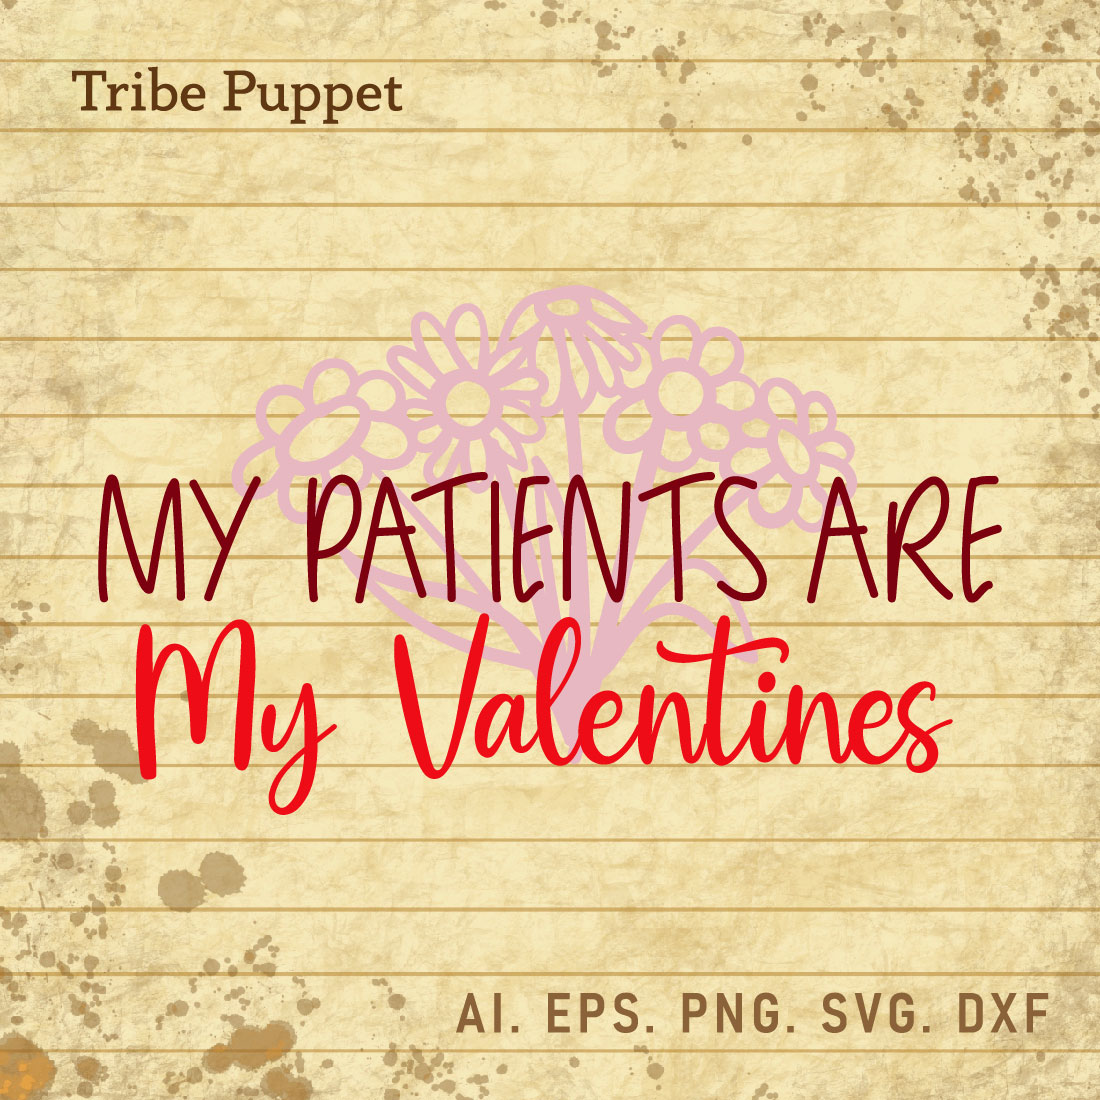 Nurse Valentines day cover image.